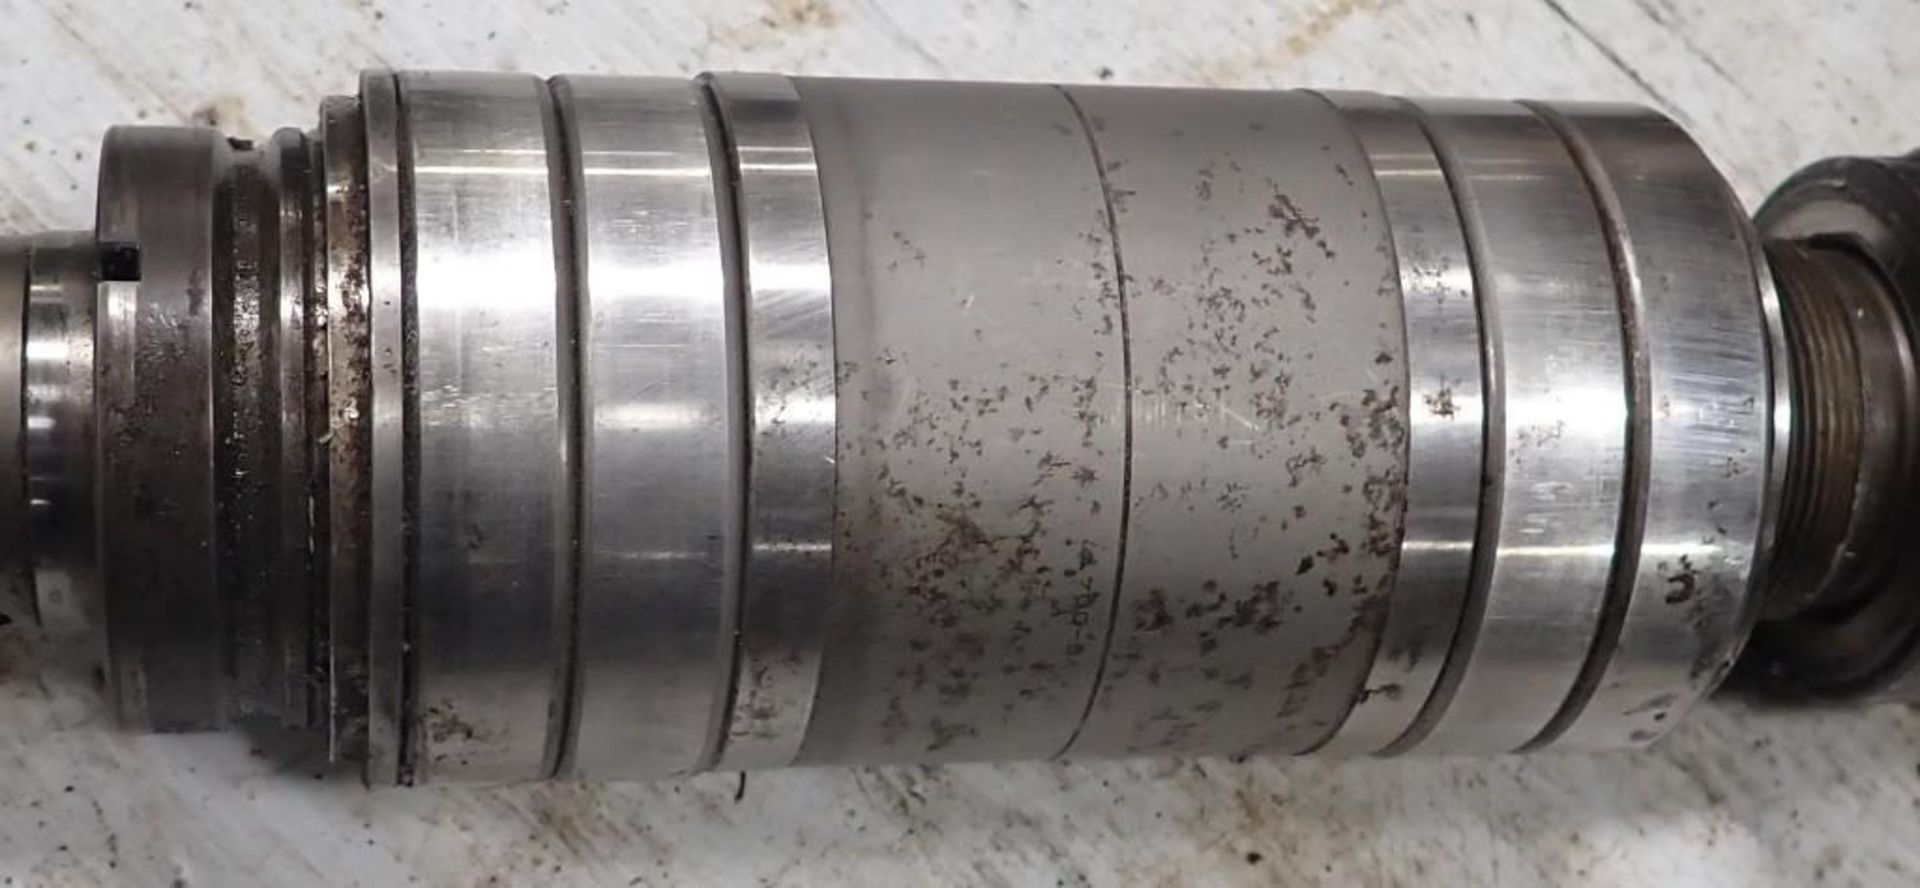 HSK40 Taper Milling Spindle w/ one Holder - Image 3 of 4